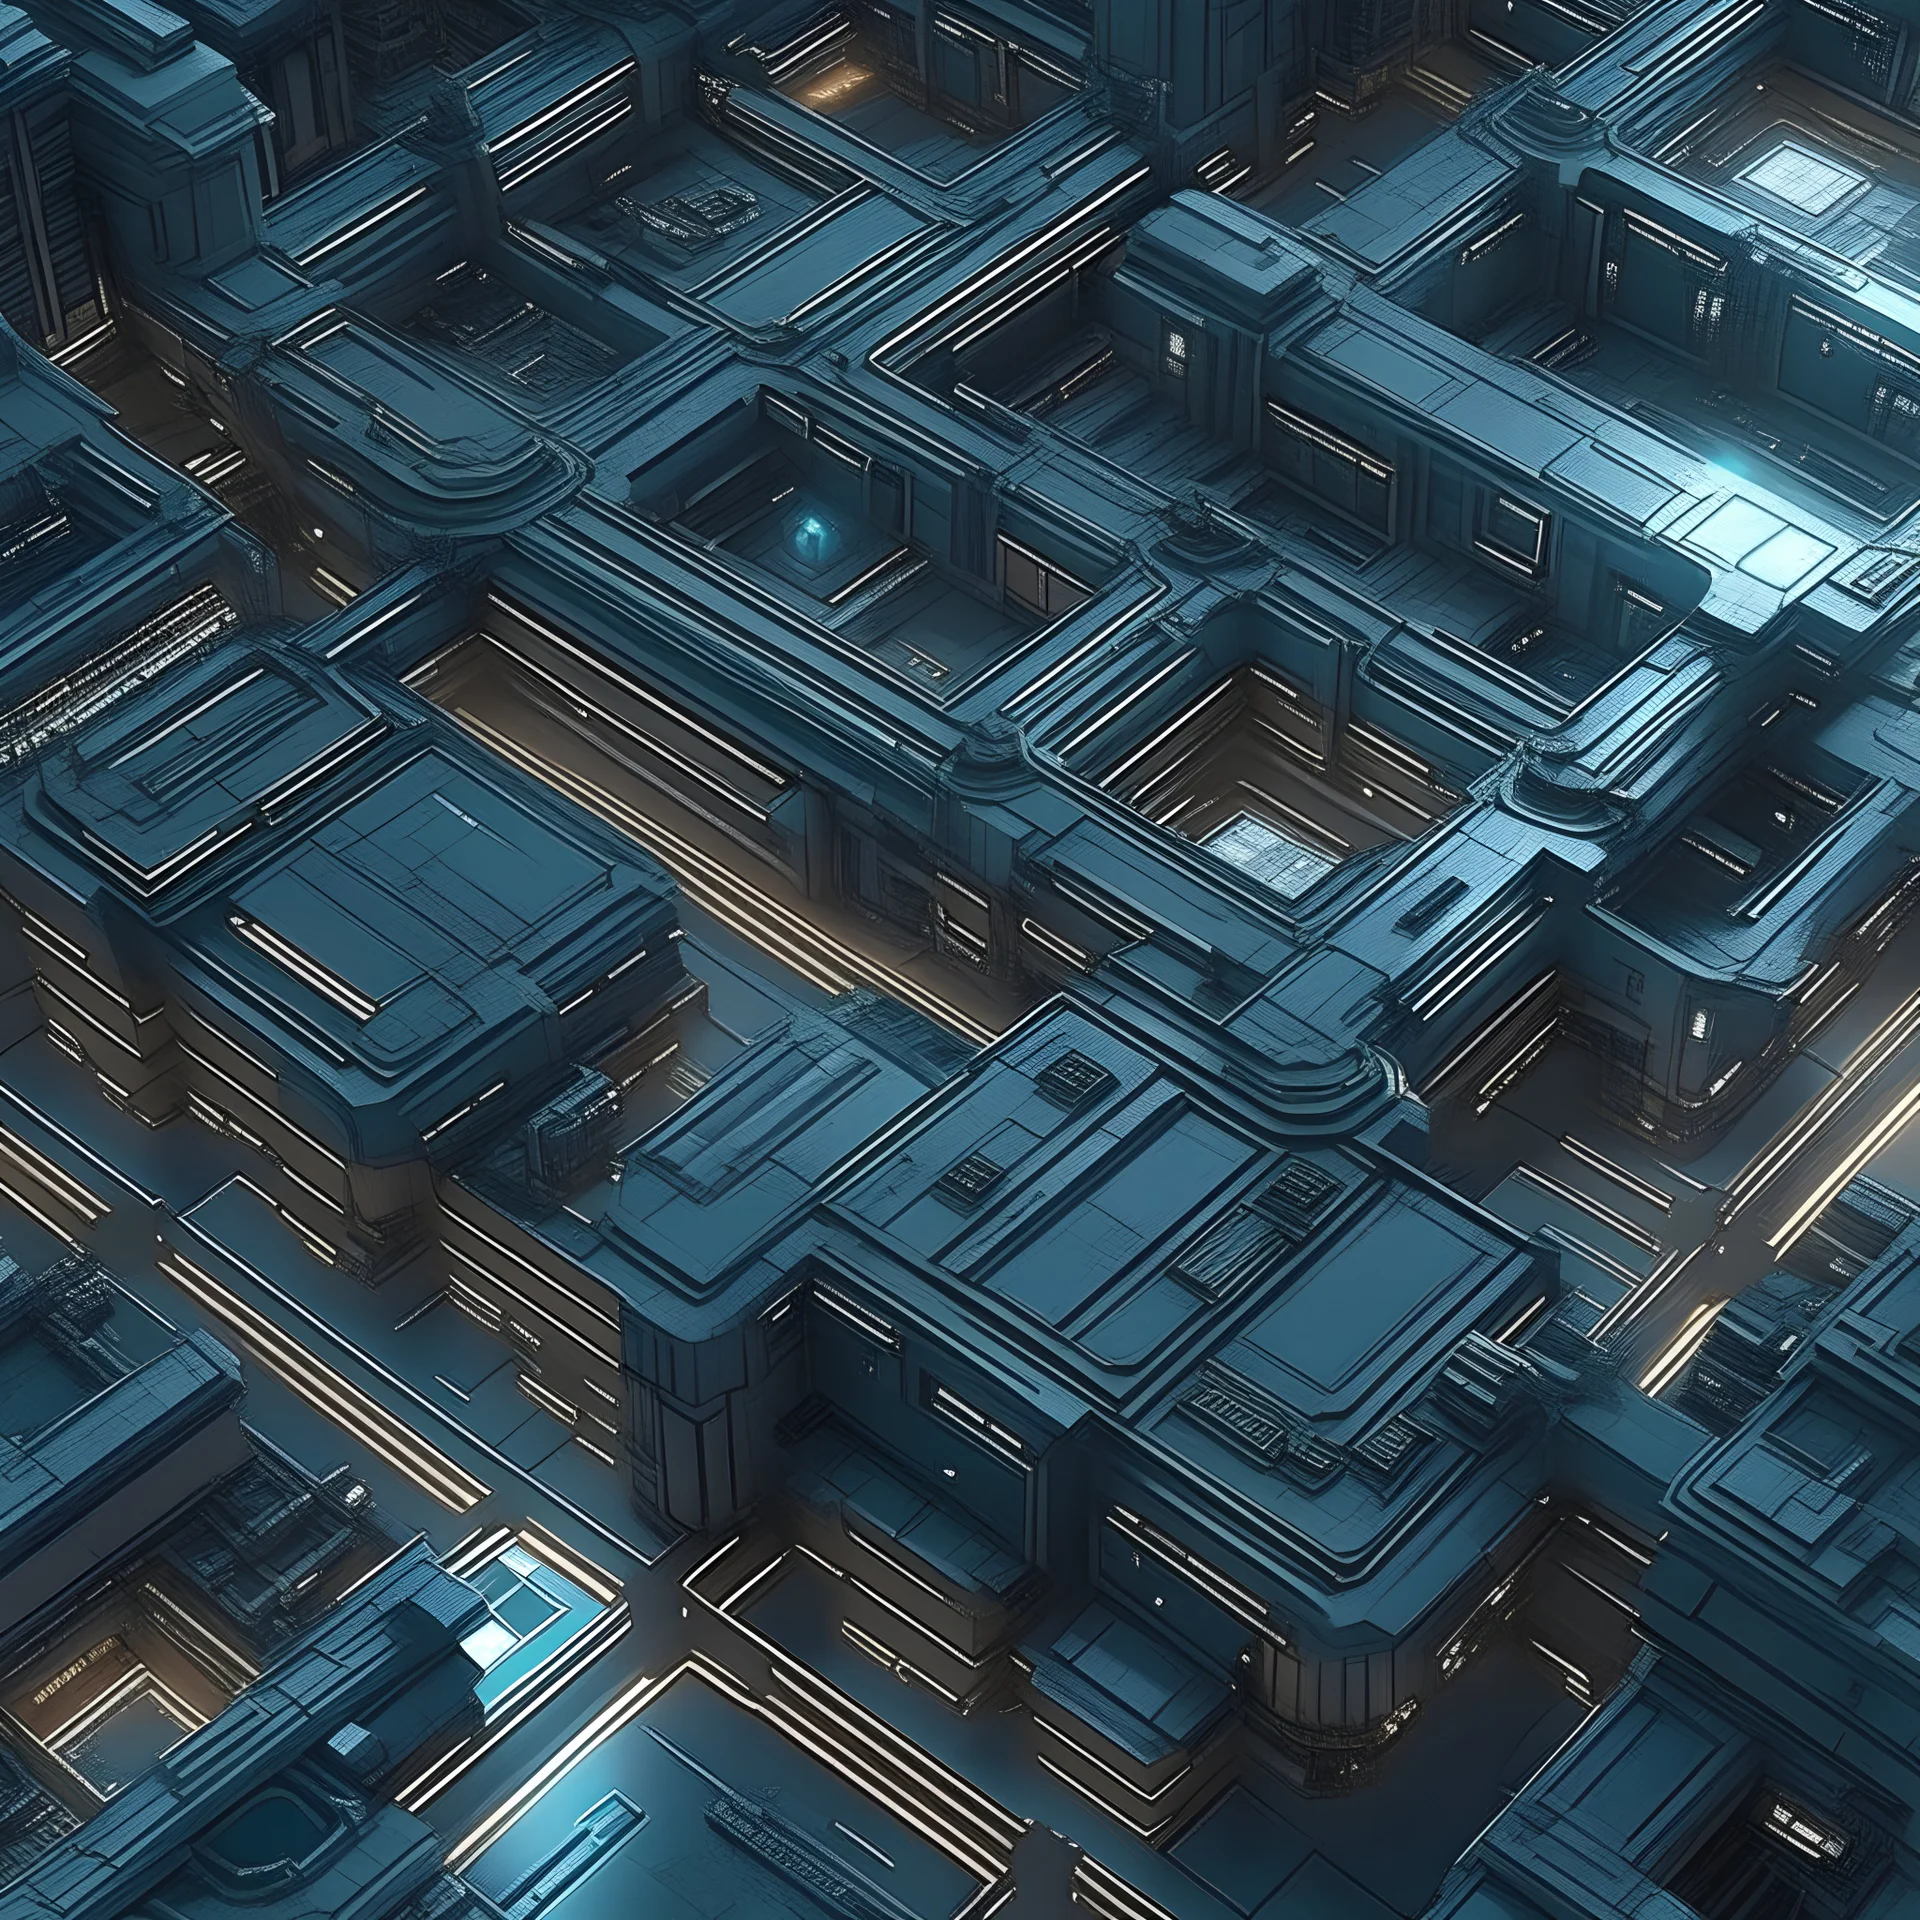 make a seamless texture of an overhead view of a futuristic, techno/cyberpunk city